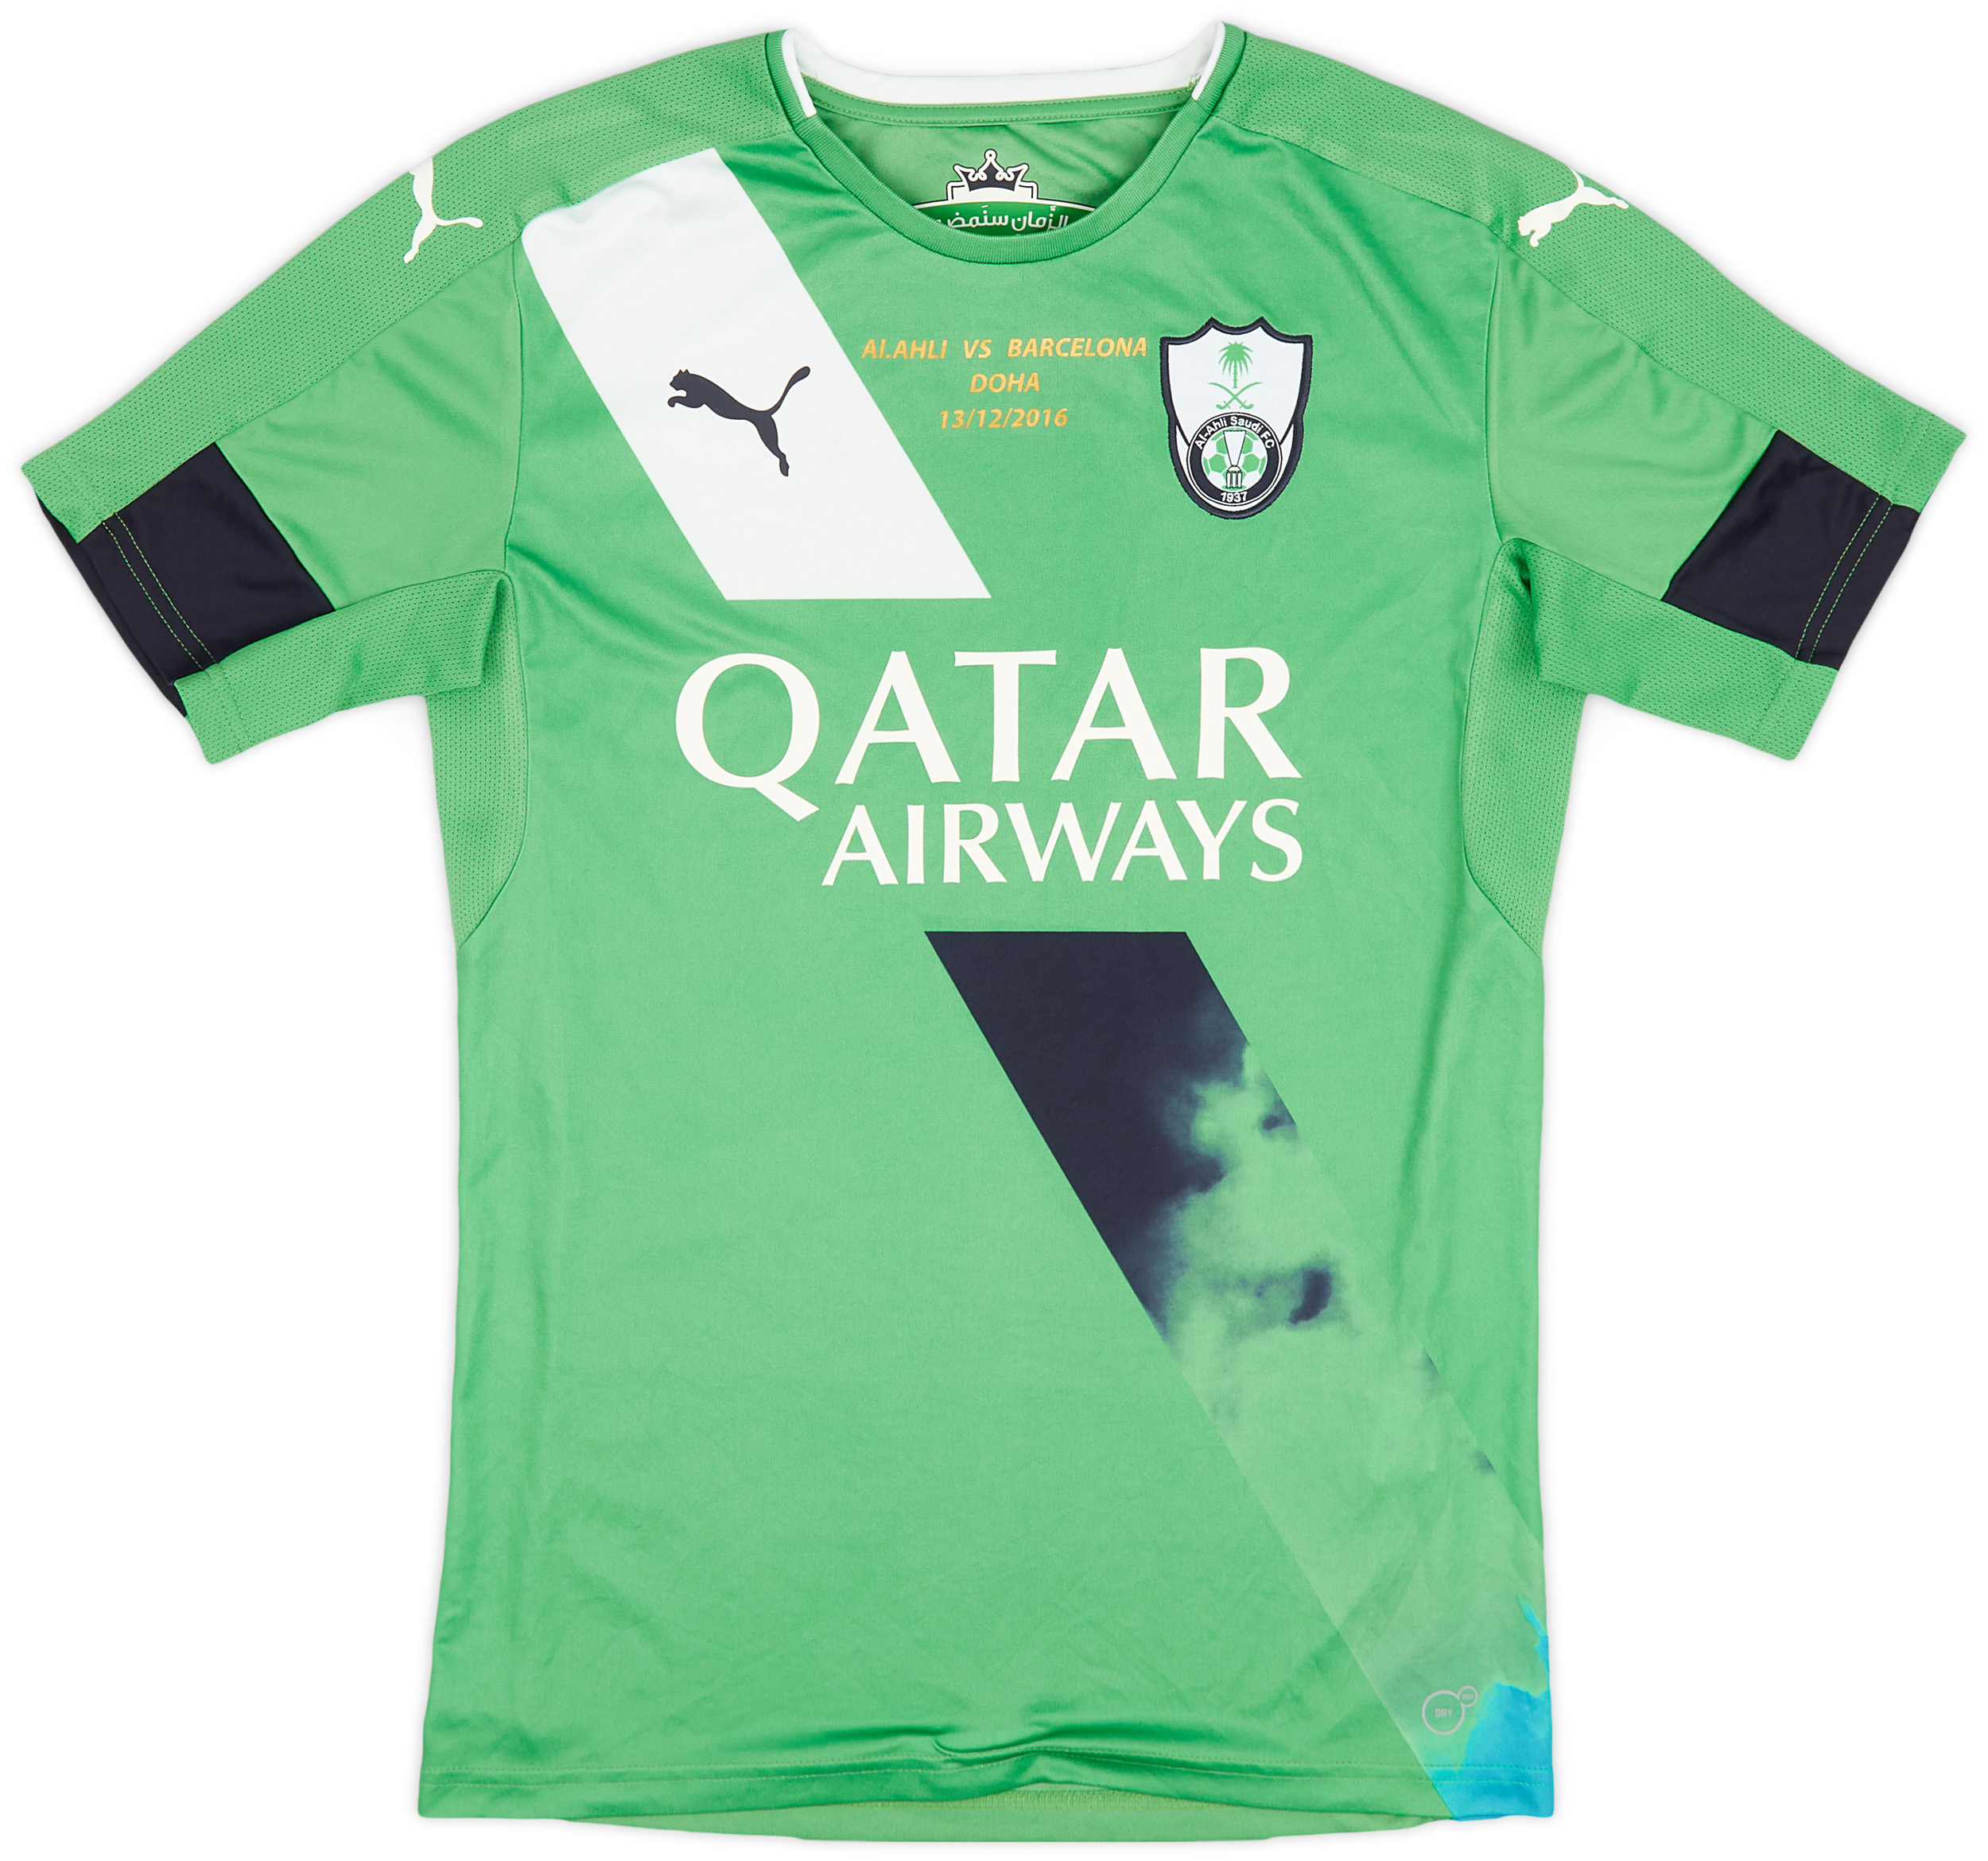 2016-17 Al-Ahli 'Match of Champions' Away Shirt - 9/10 - ()